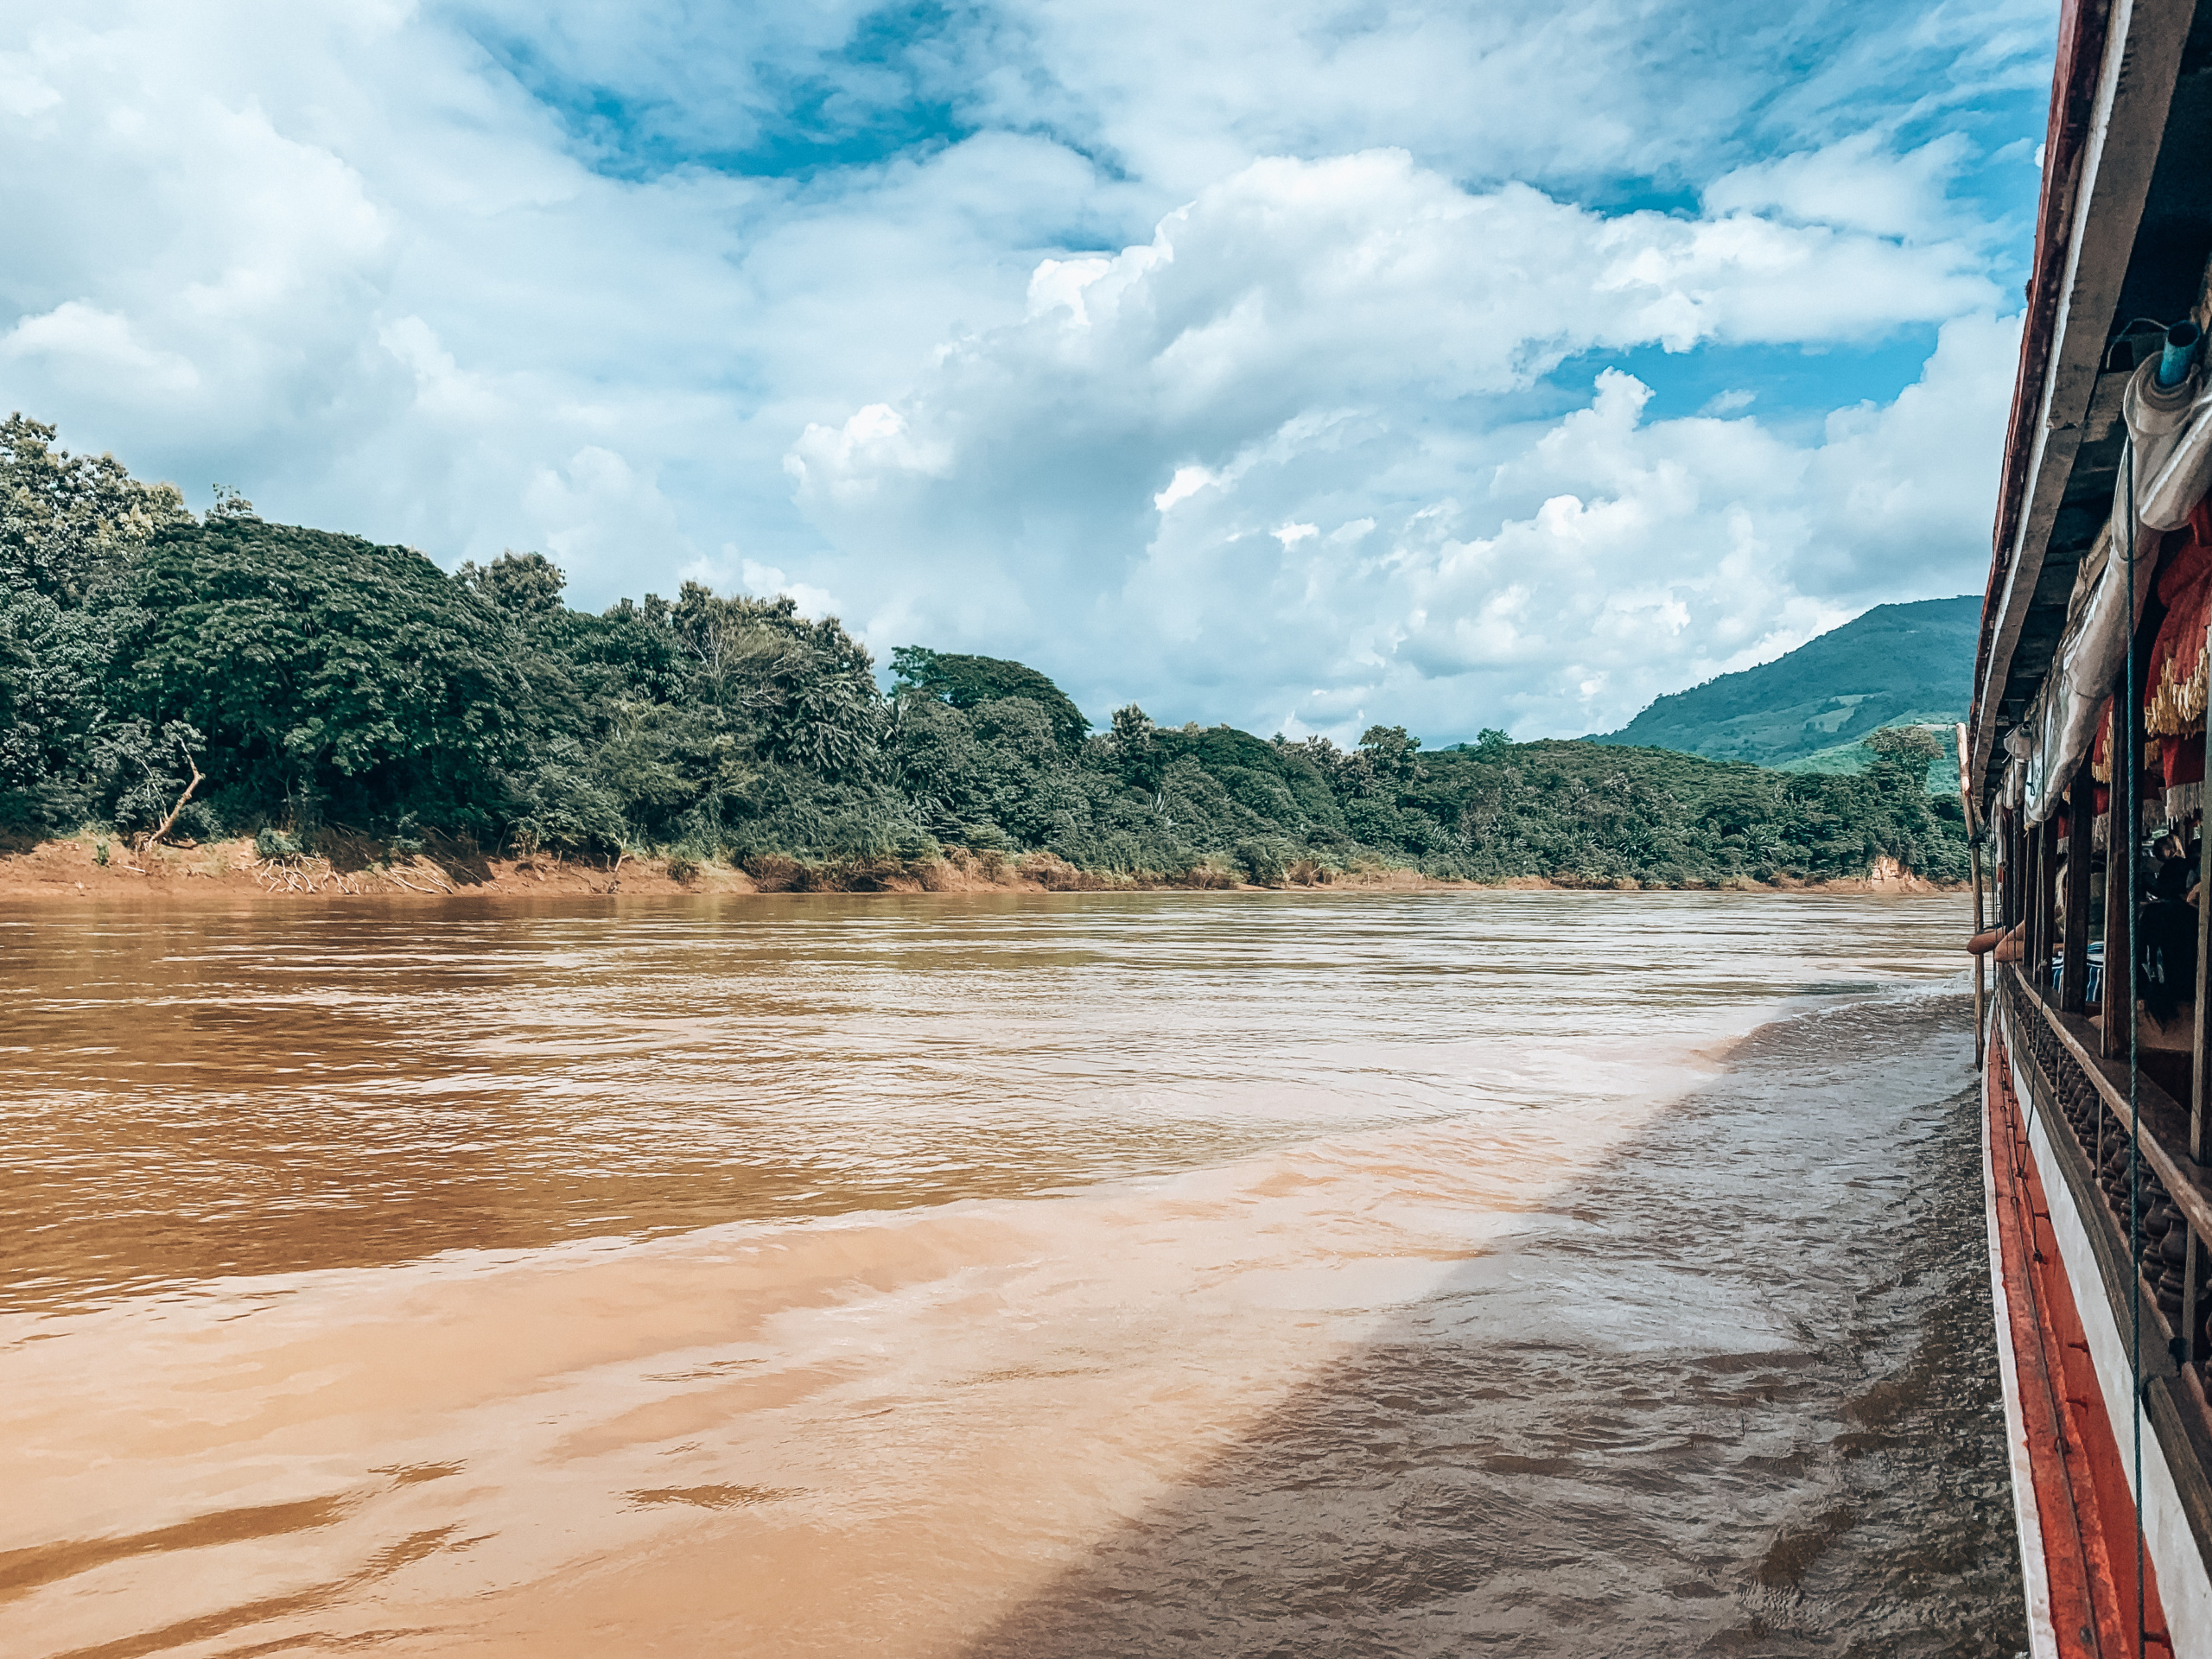 Wat te doen in Laos? slowboat